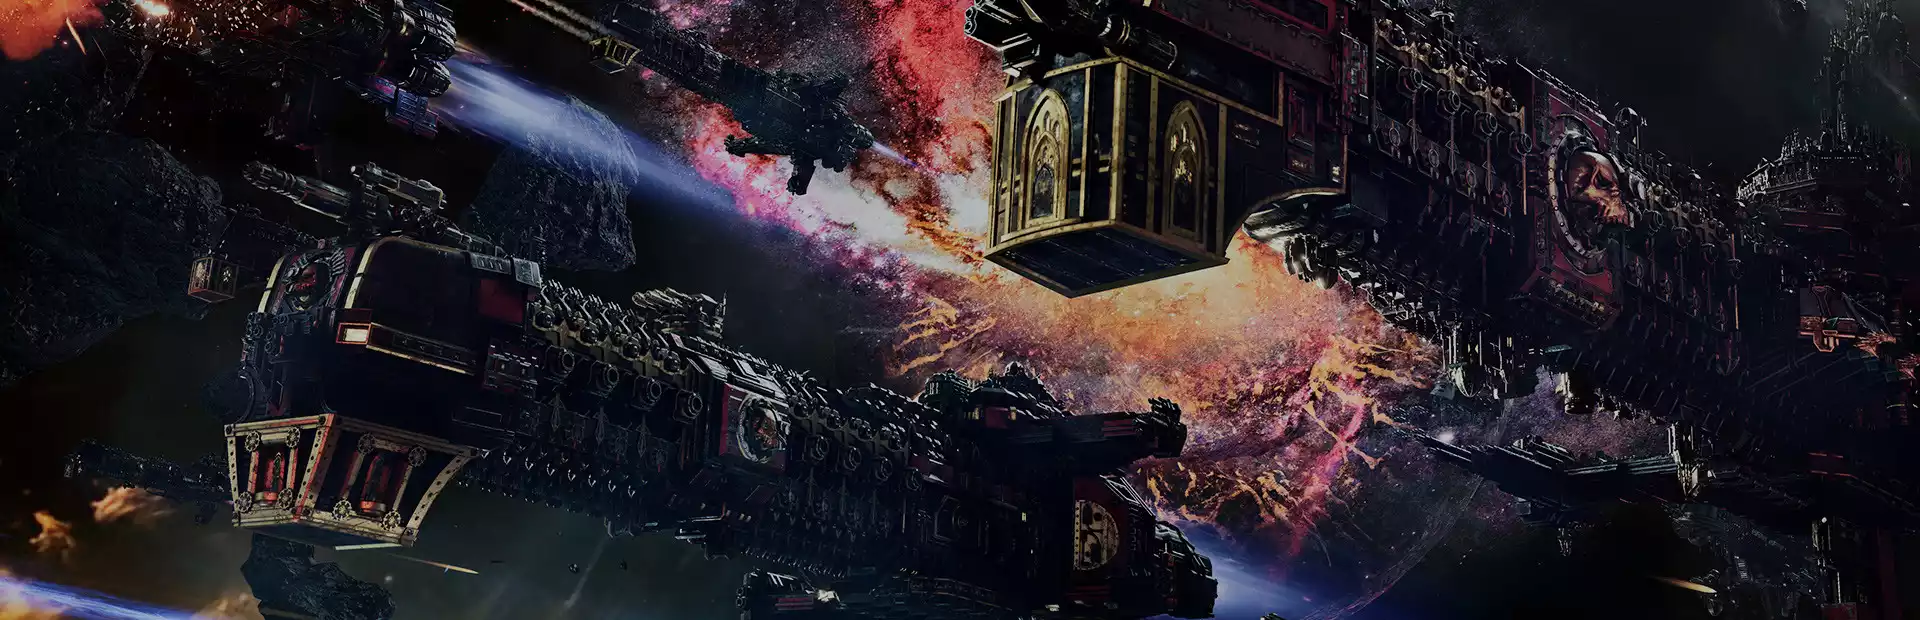 Battlefleet Gothic: Armada 2 Steam Key China